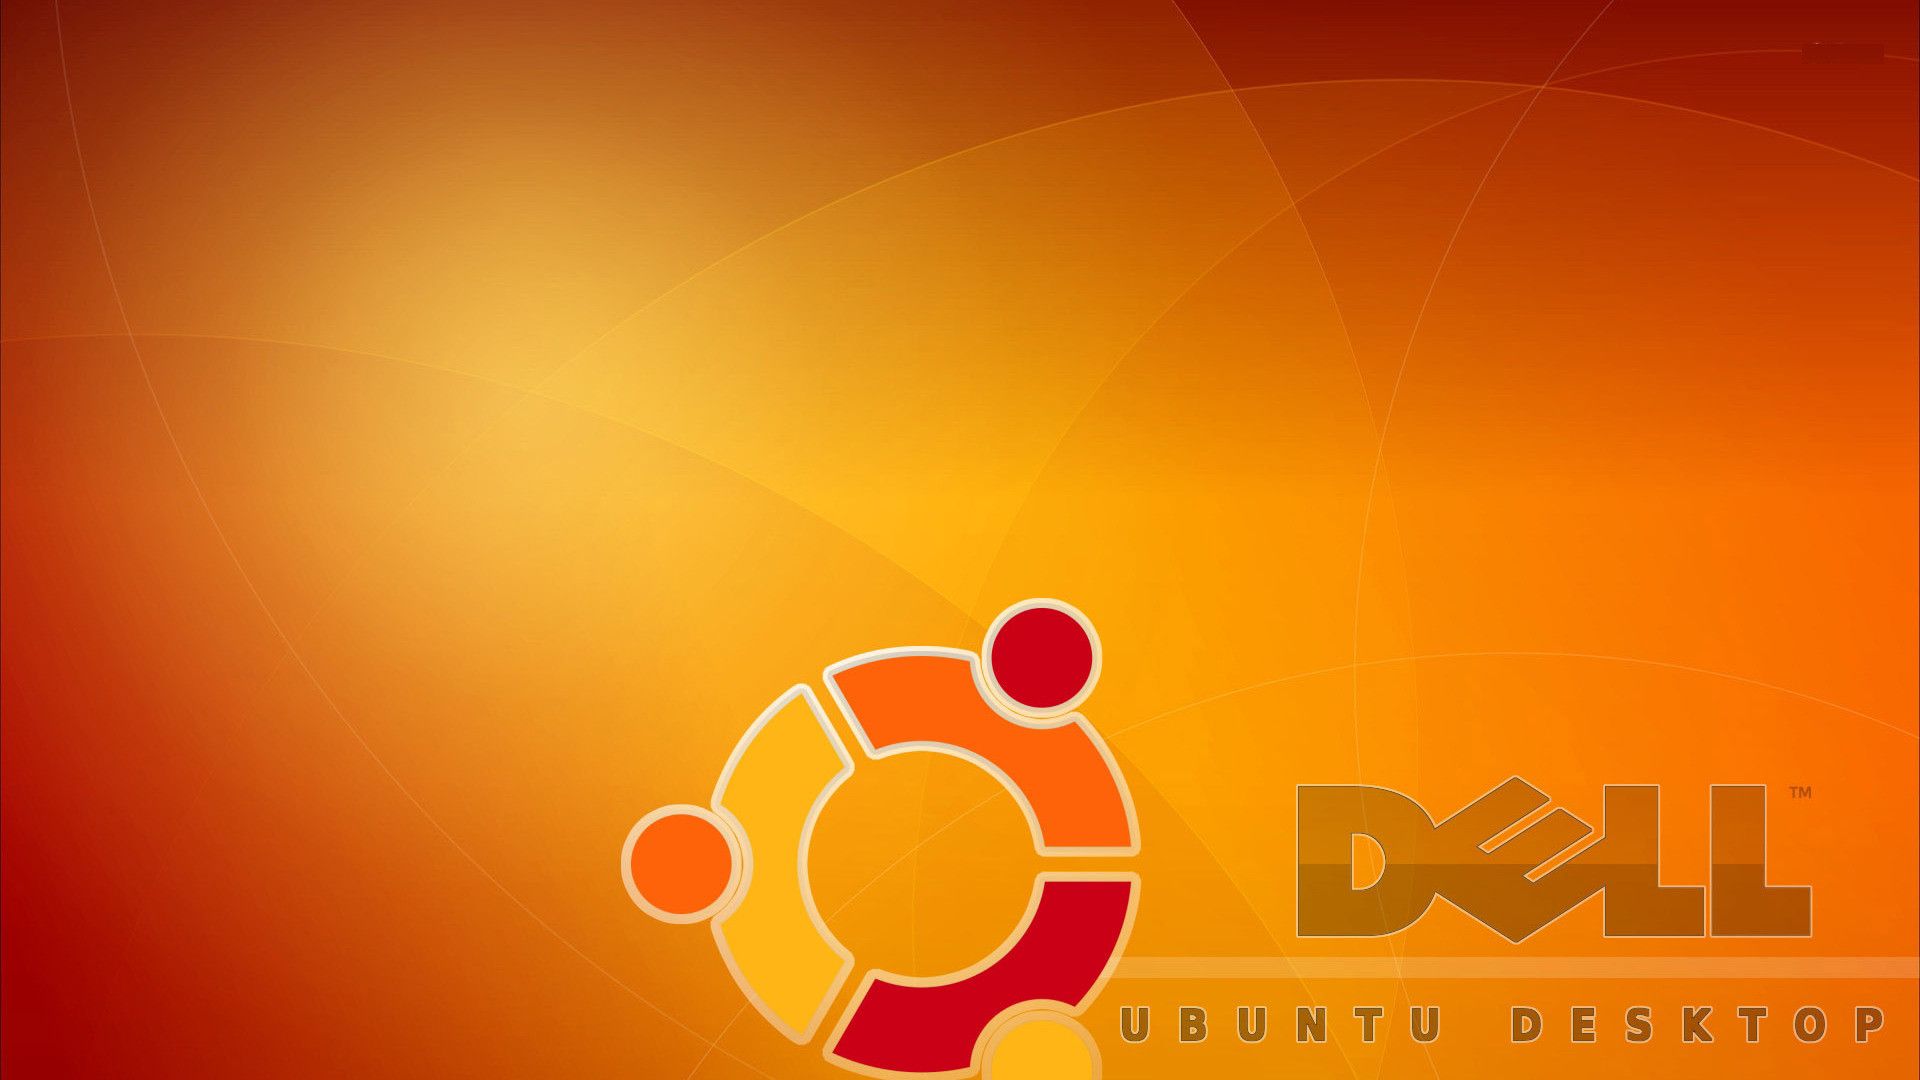 Ubuntu Dell HD Wallpapers - 4k, HD ...